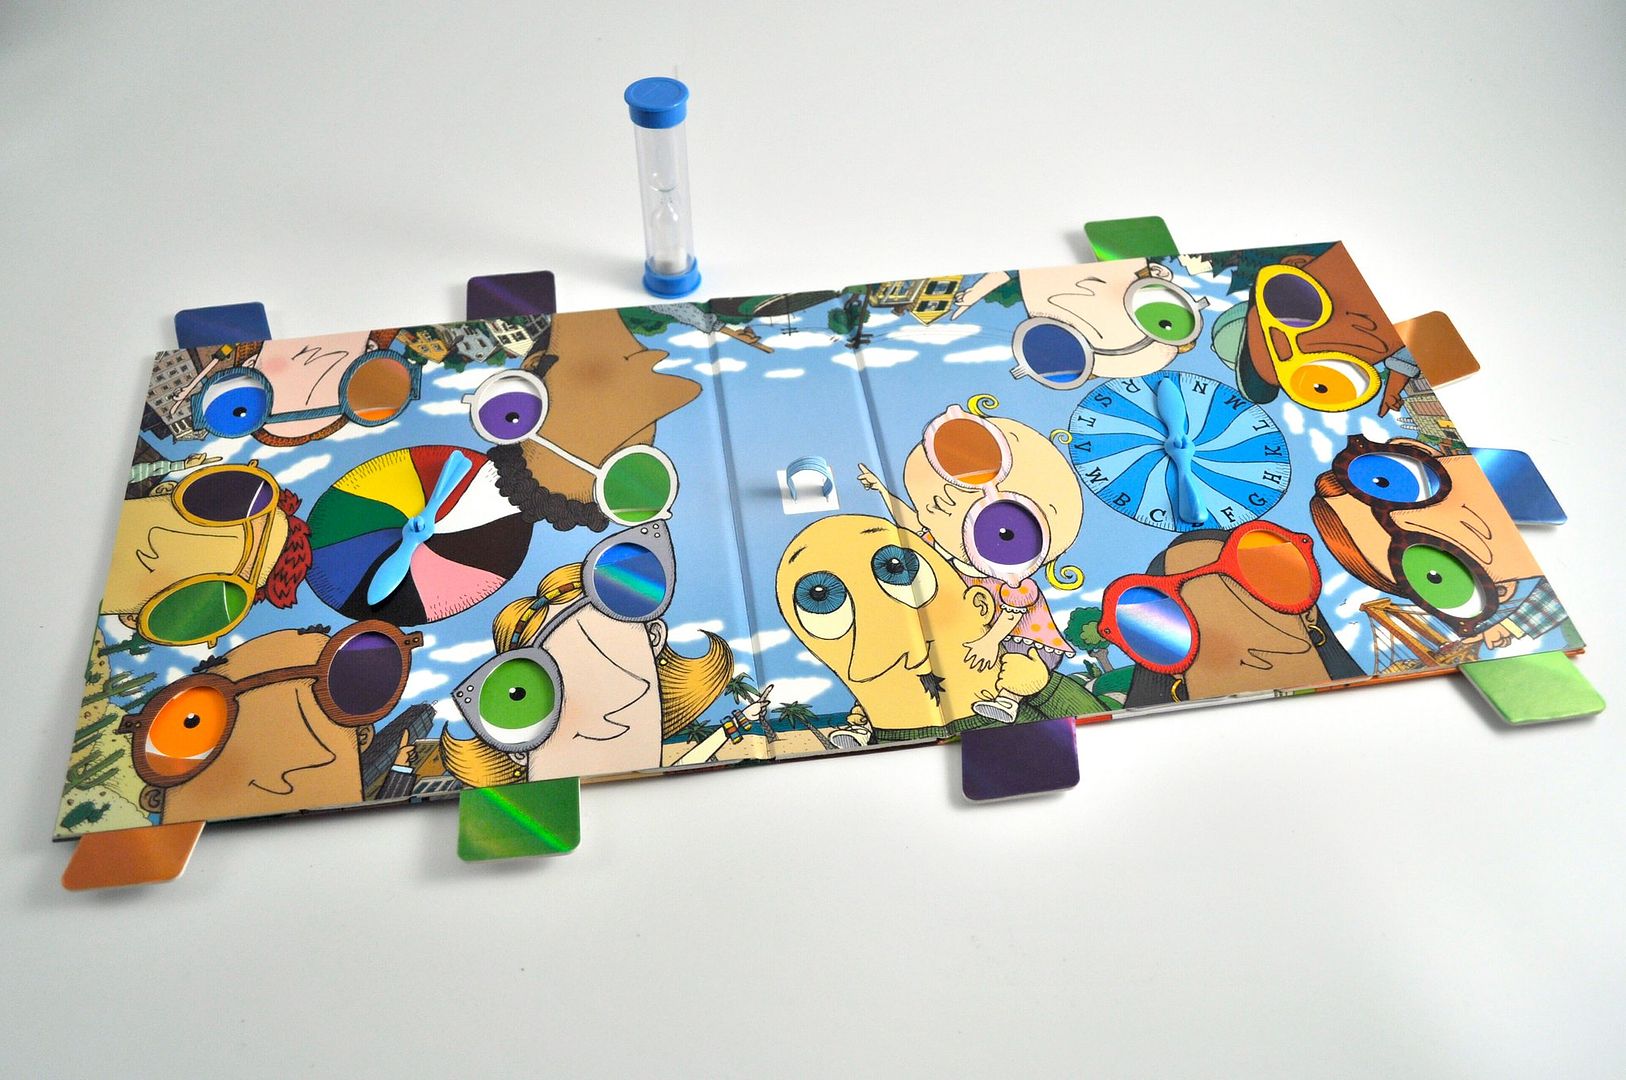 Travel toys for preschoolers: Slooooks board game